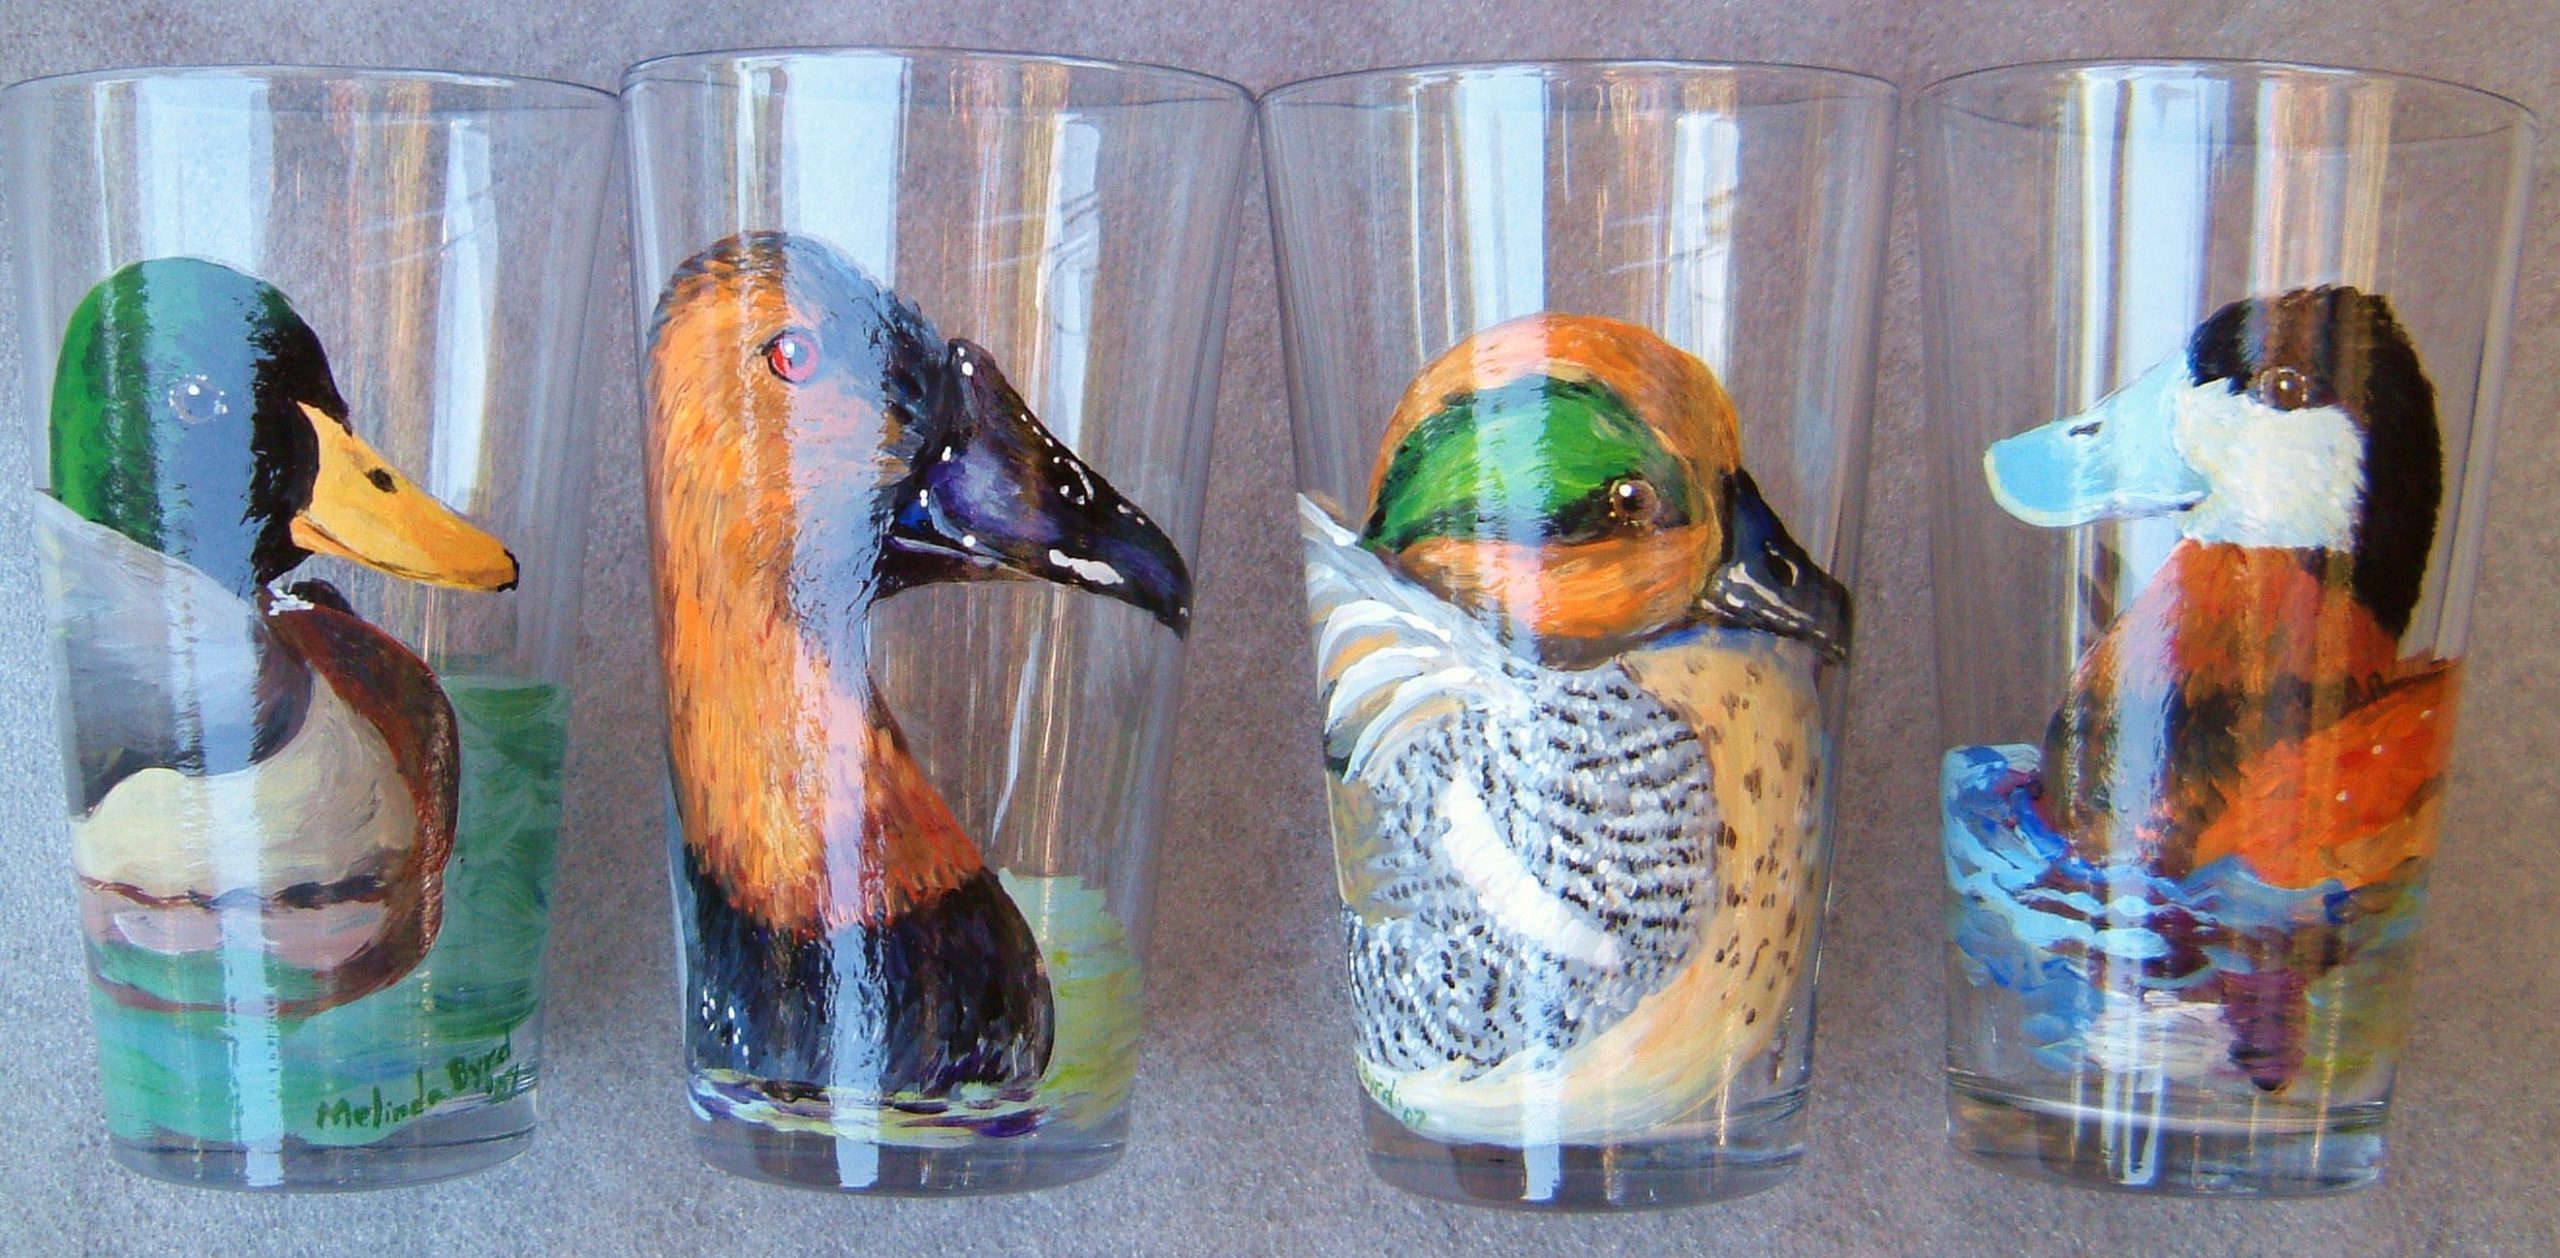 ducks hand-painted on pint glasses